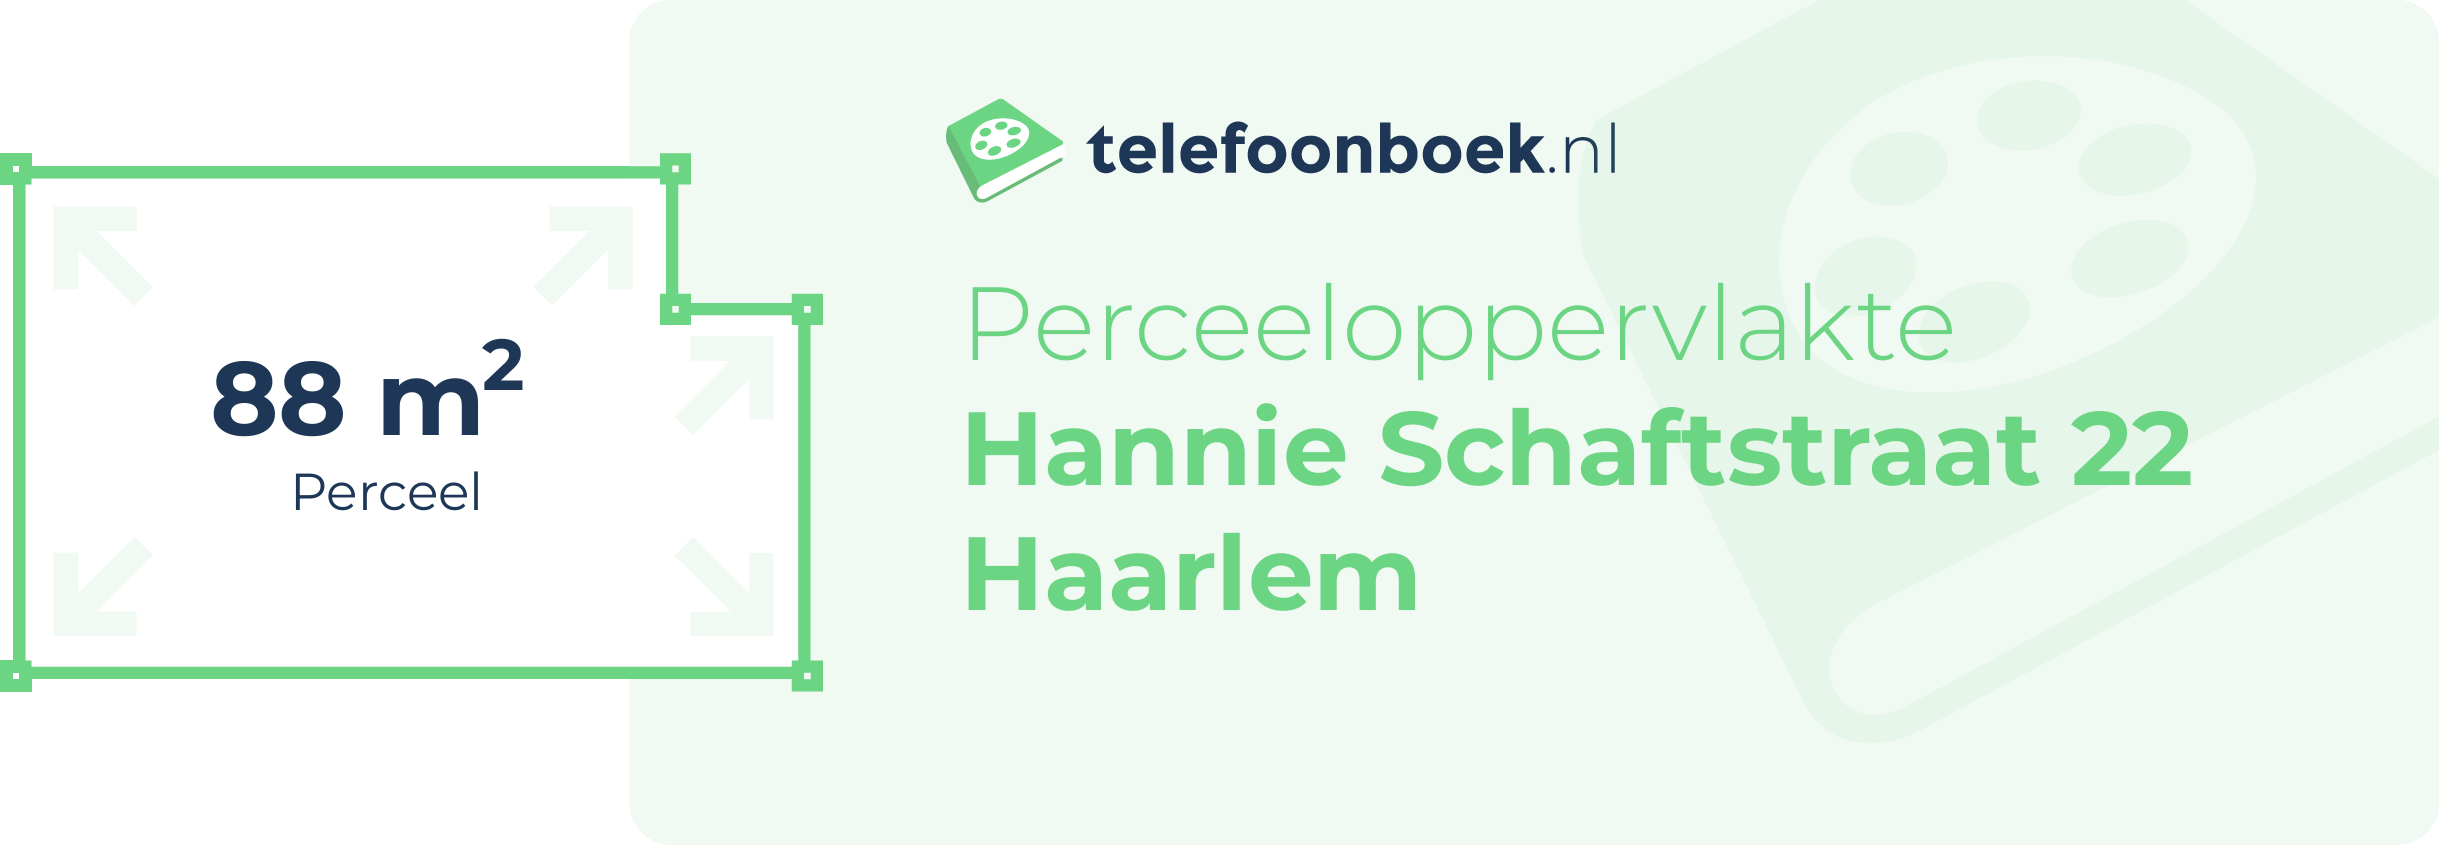 Perceeloppervlakte Hannie Schaftstraat 22 Haarlem